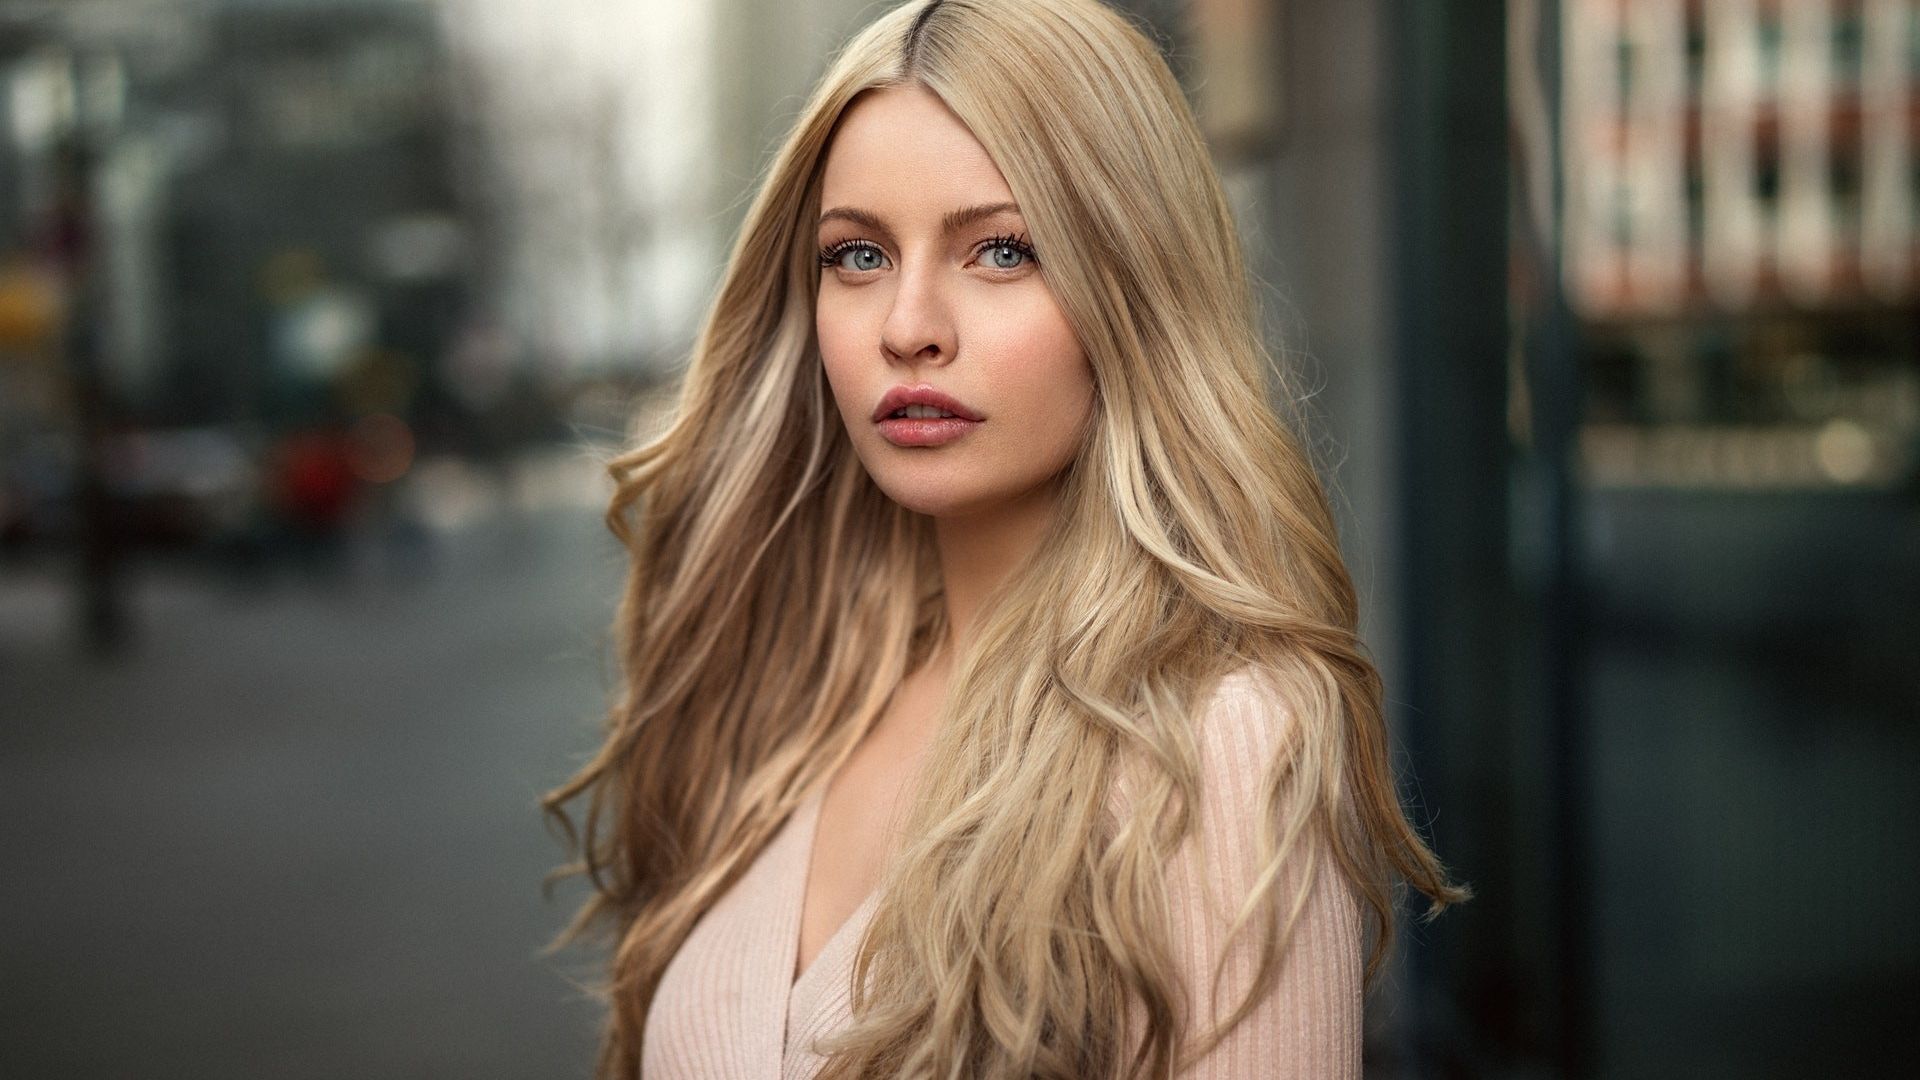 Wallpaper Karina, model, blonde